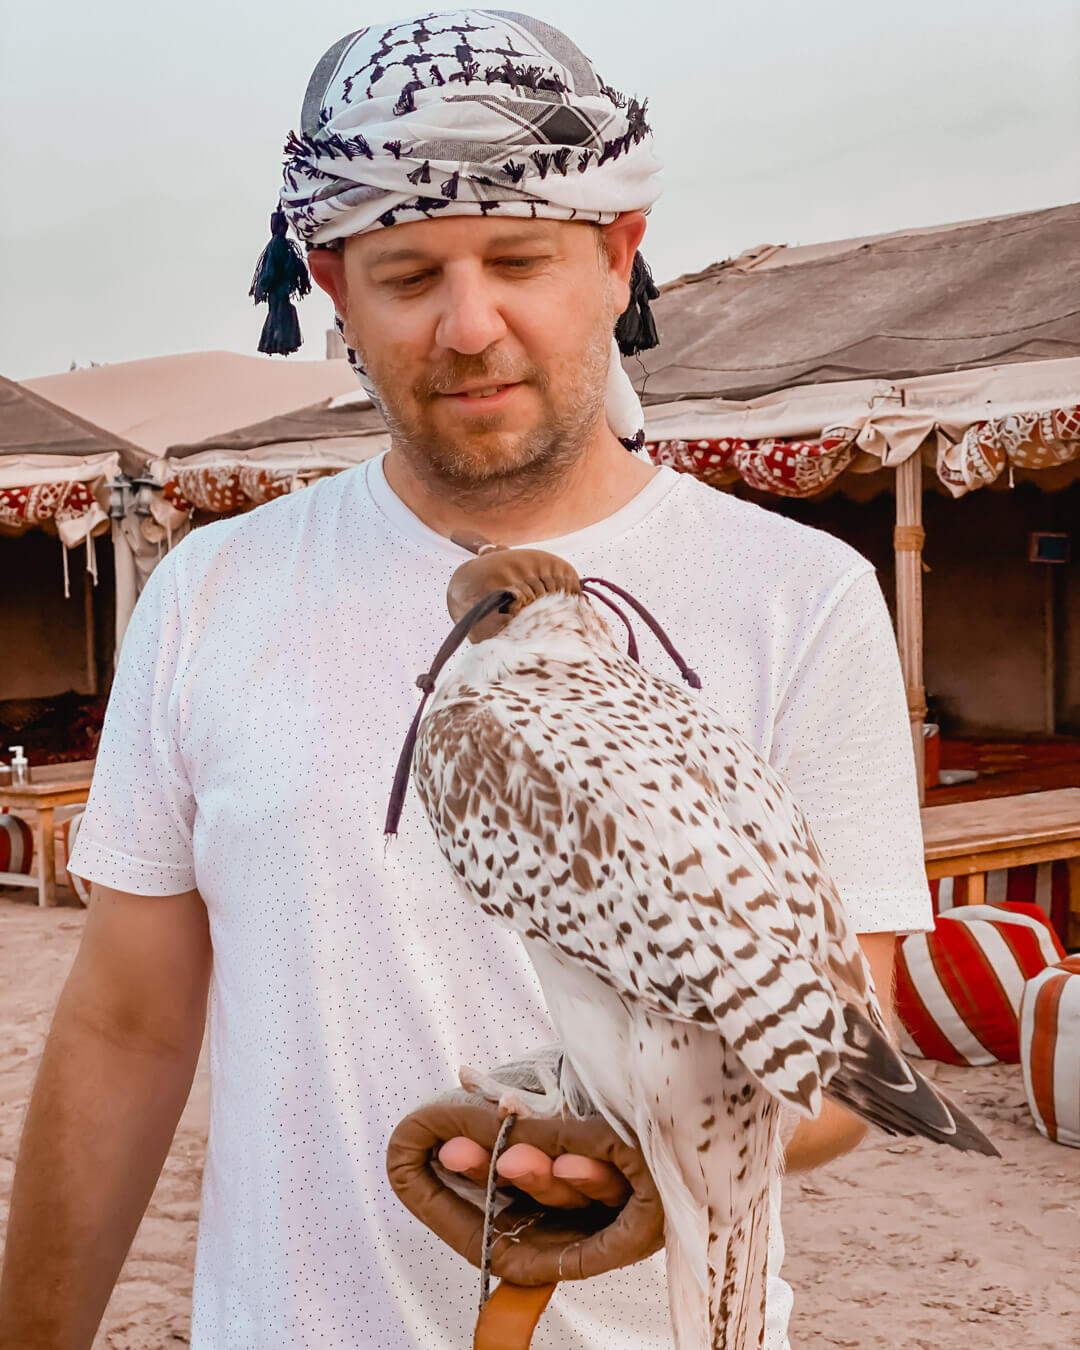 Falcon Interaction in the Dubai Desert